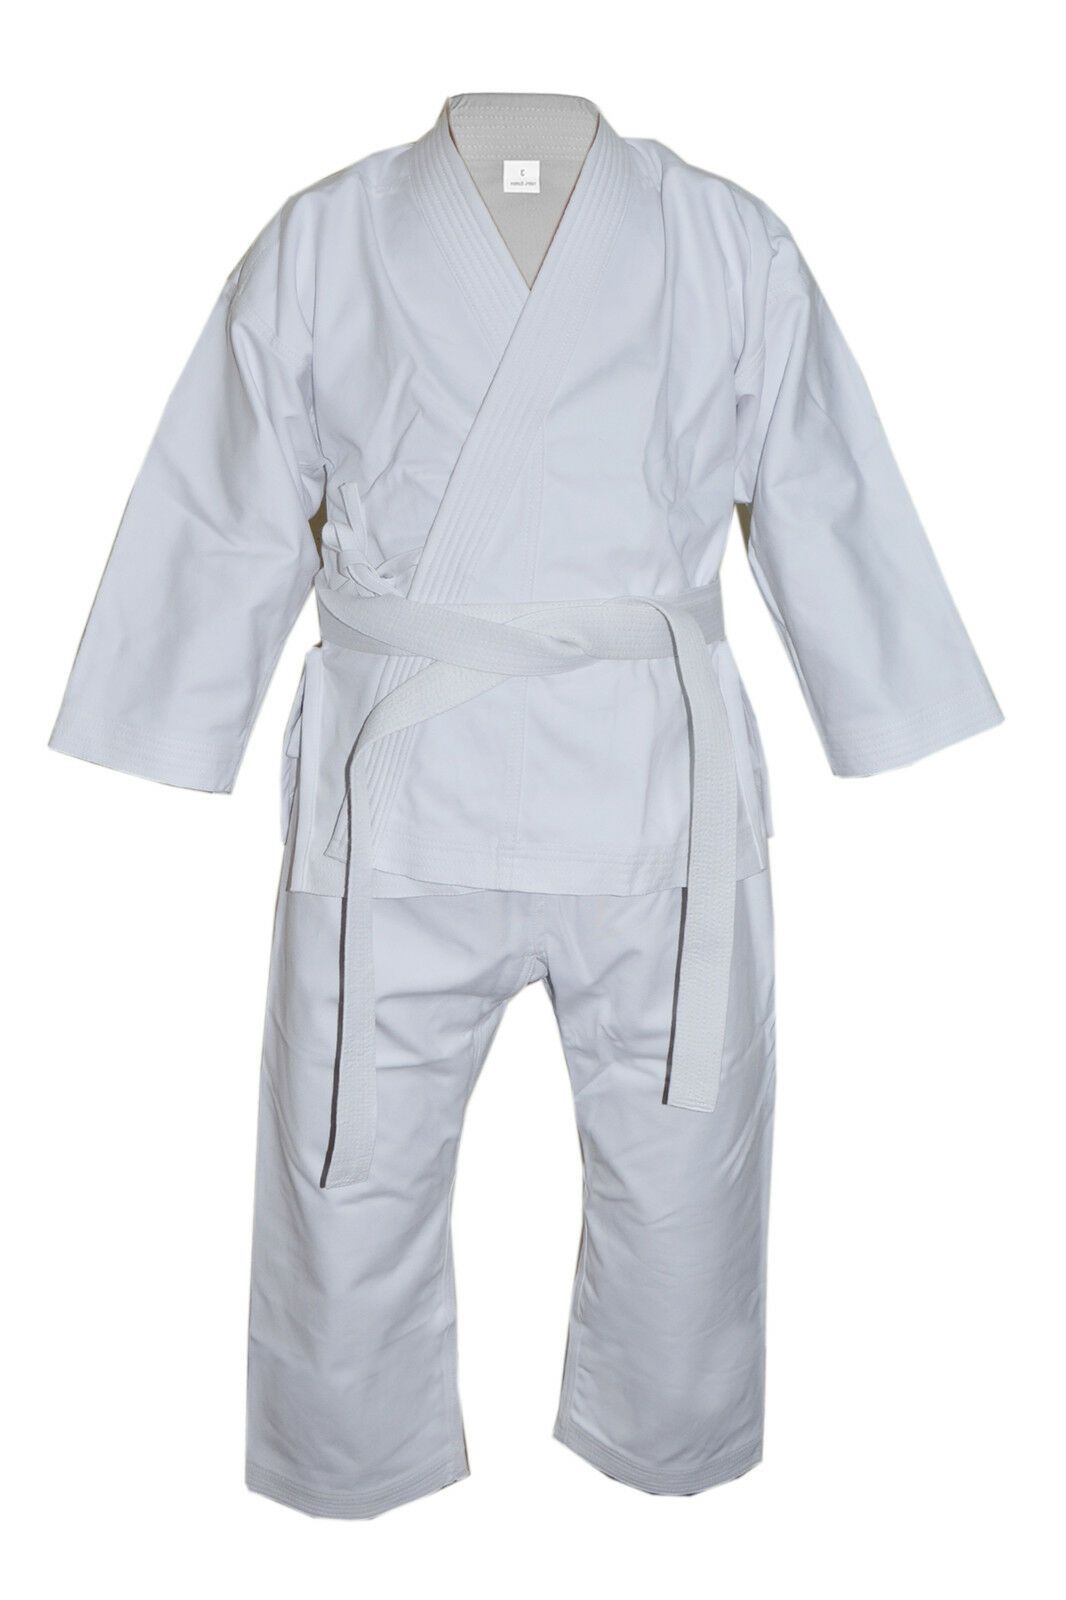 Karate Suit Gi Uniform White Adult & Kids Free white belt